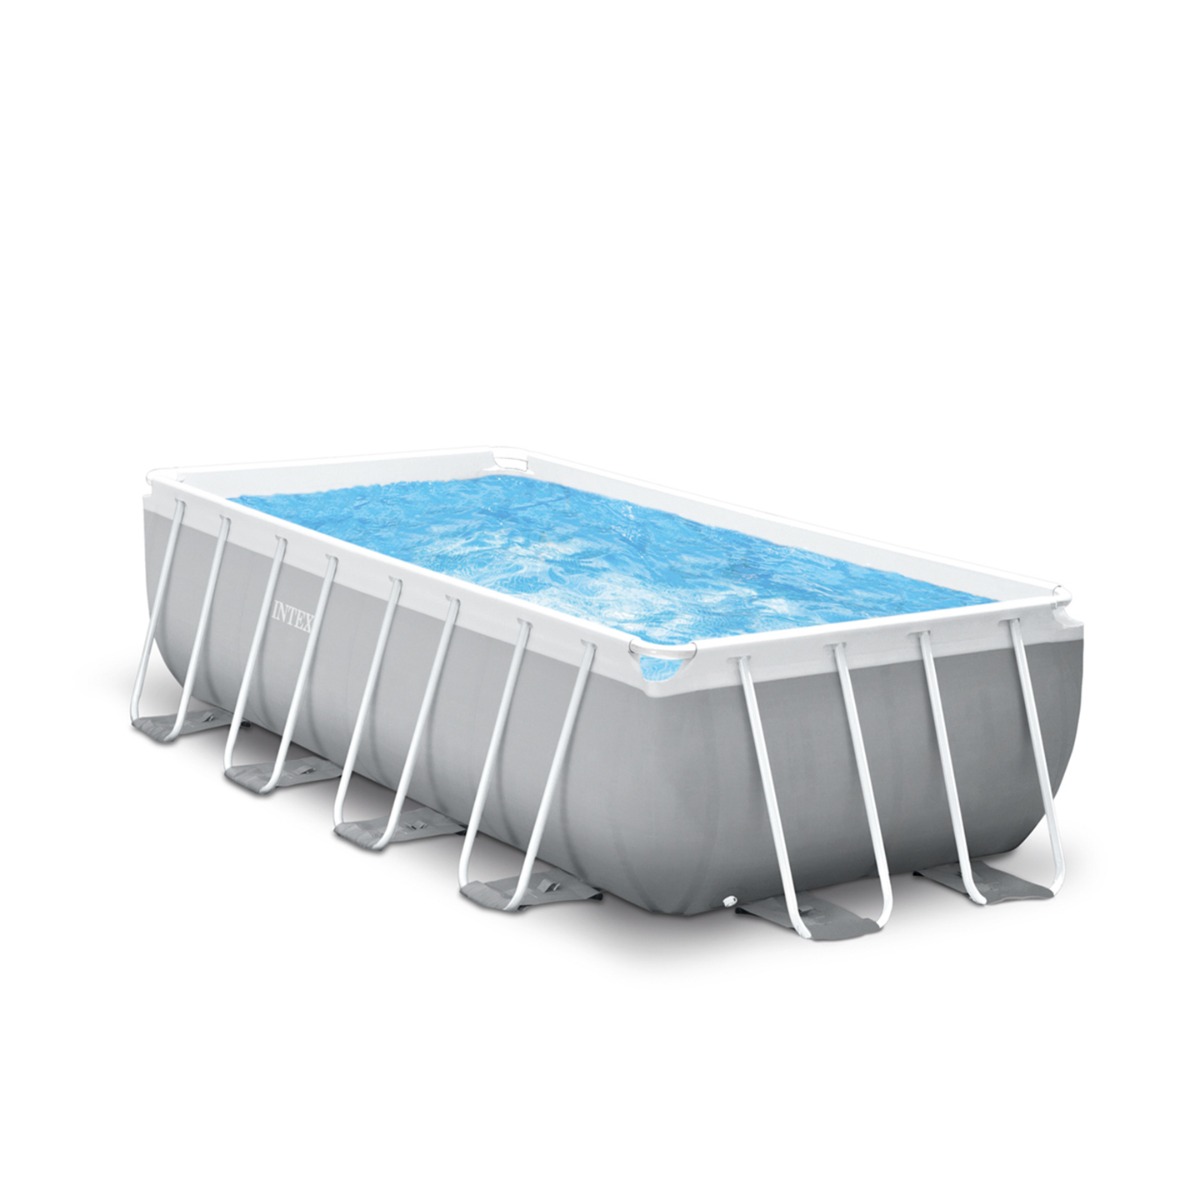 Intex Prism Frame zwembad set rechthoek 400 x 200 x 100 cm